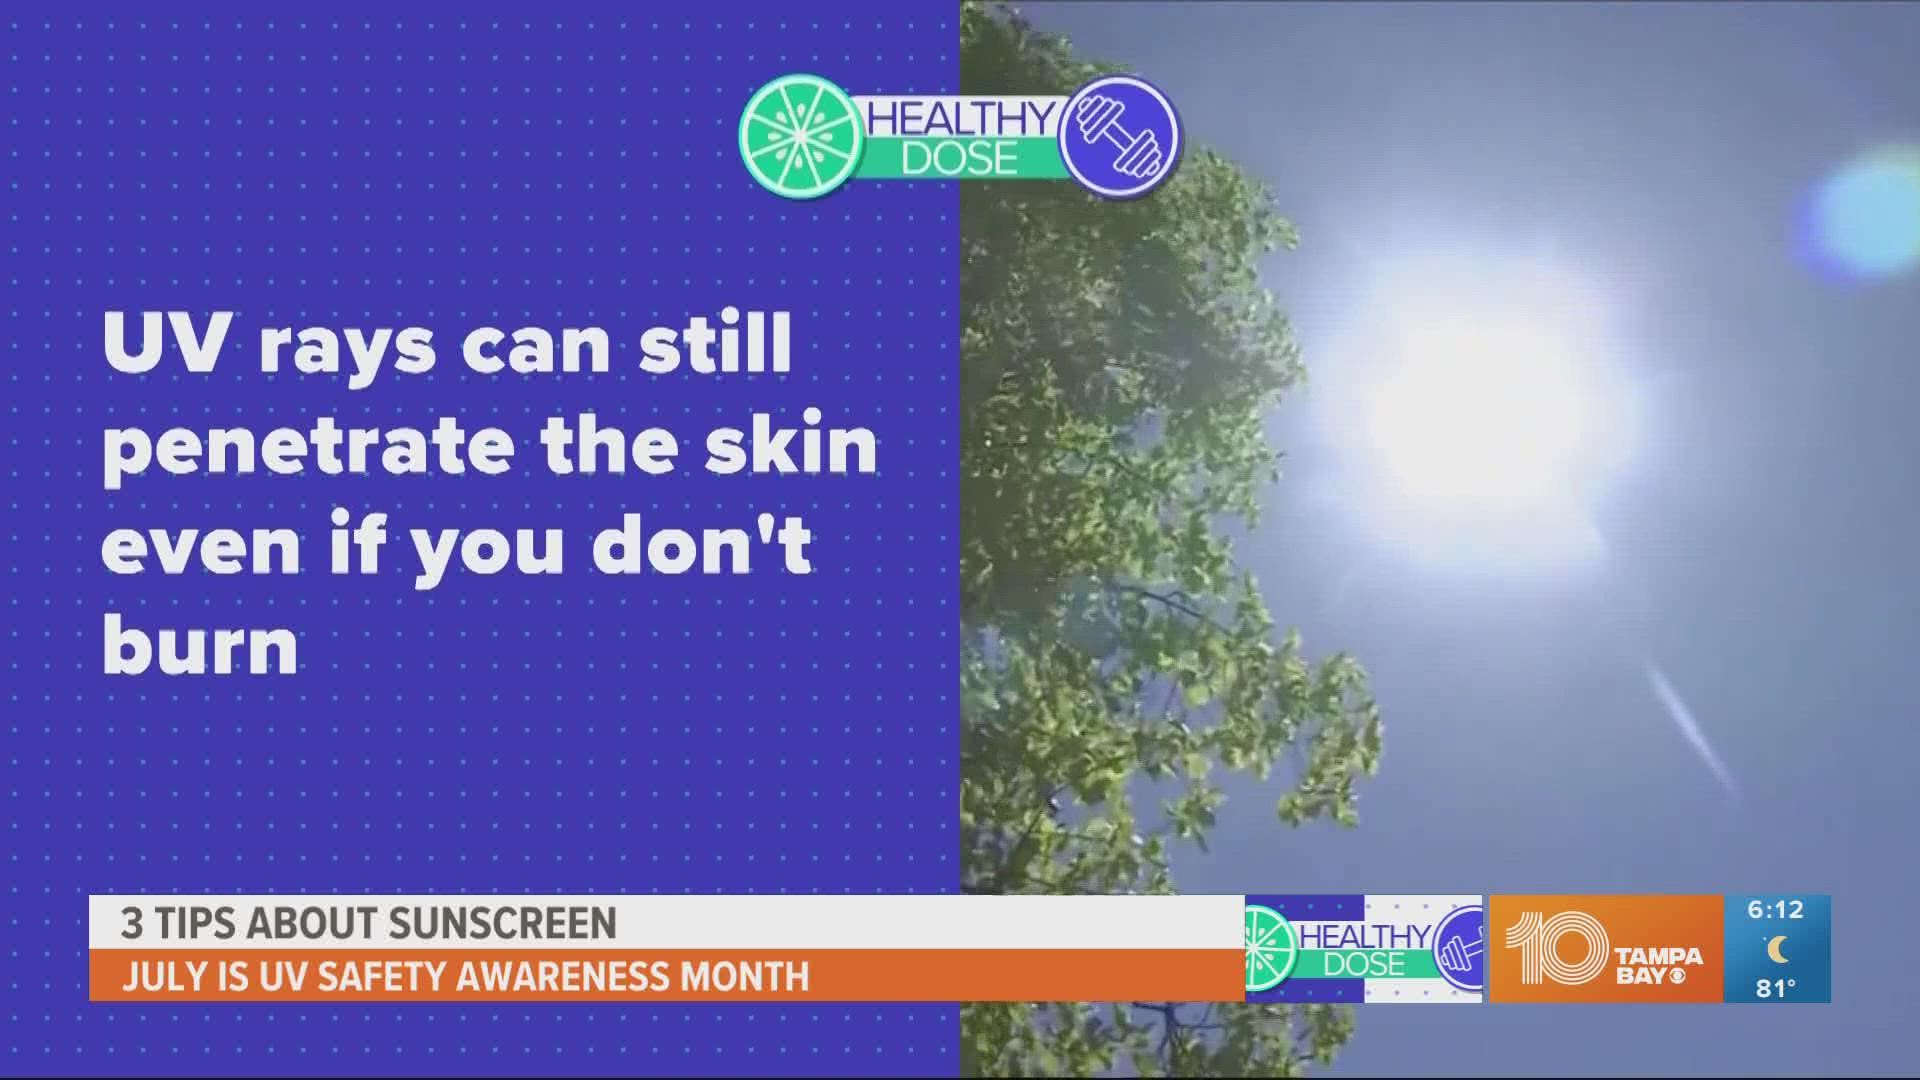 Dr. Priya Nayyer says everyone should wear sunscreen, regardless of skin tone.